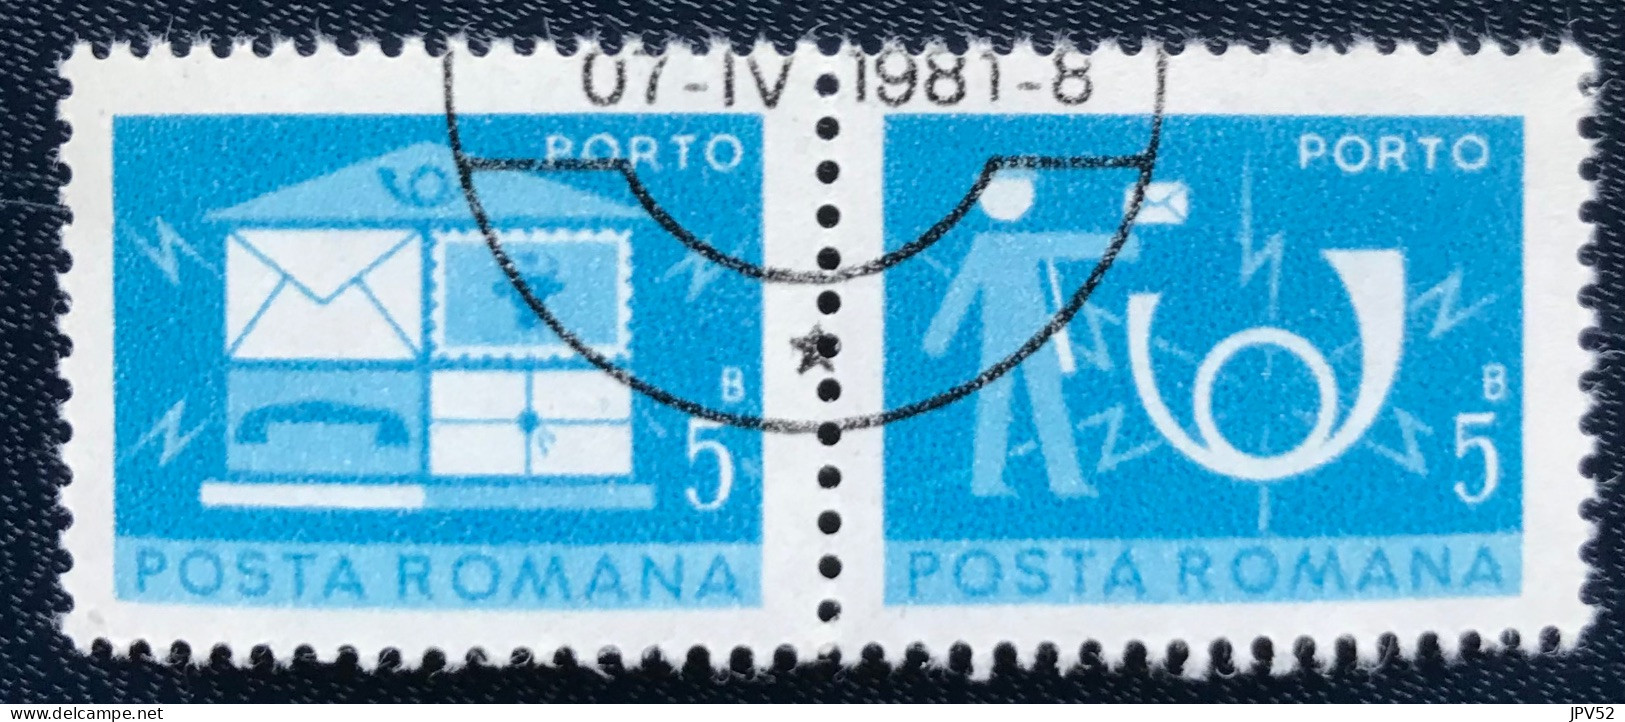 Romana - Roemenië - C14/54 - 1974 - (°)used - Michel 119 - Brievenbus & Postbode & Posthoorn - Strafport